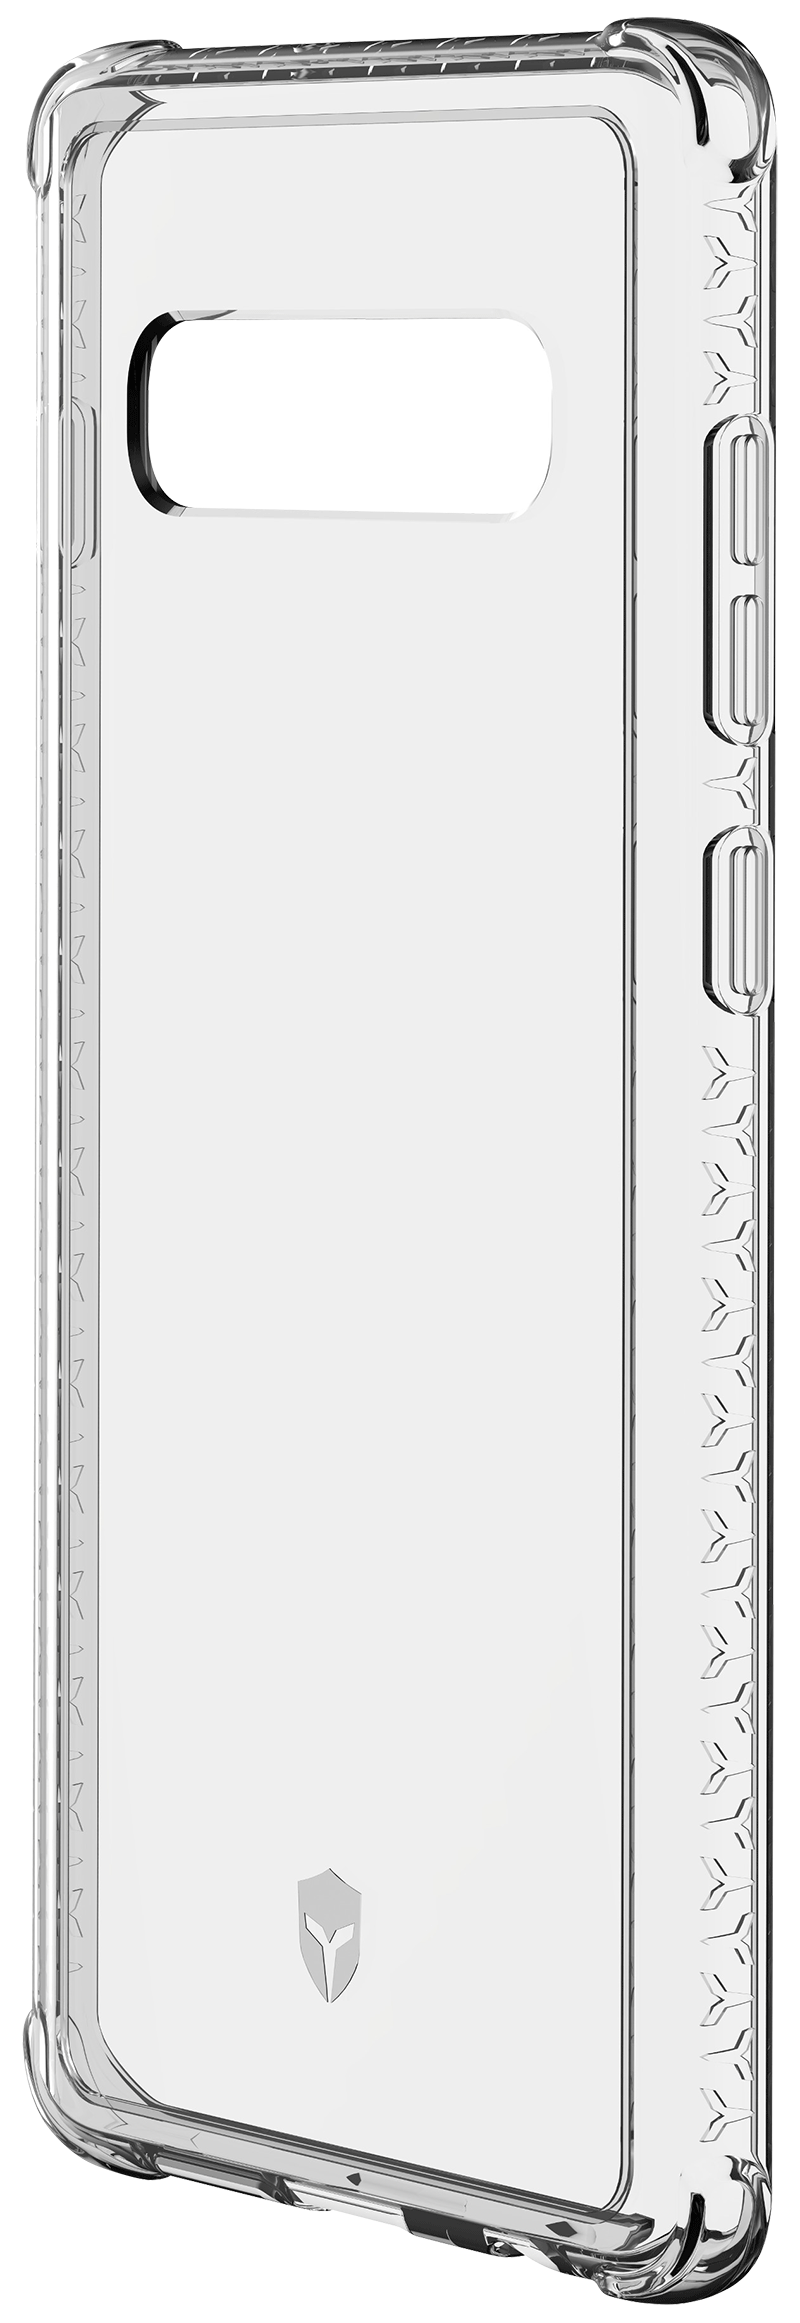 Coque Force Case Air Galaxy S10 Plus transparente